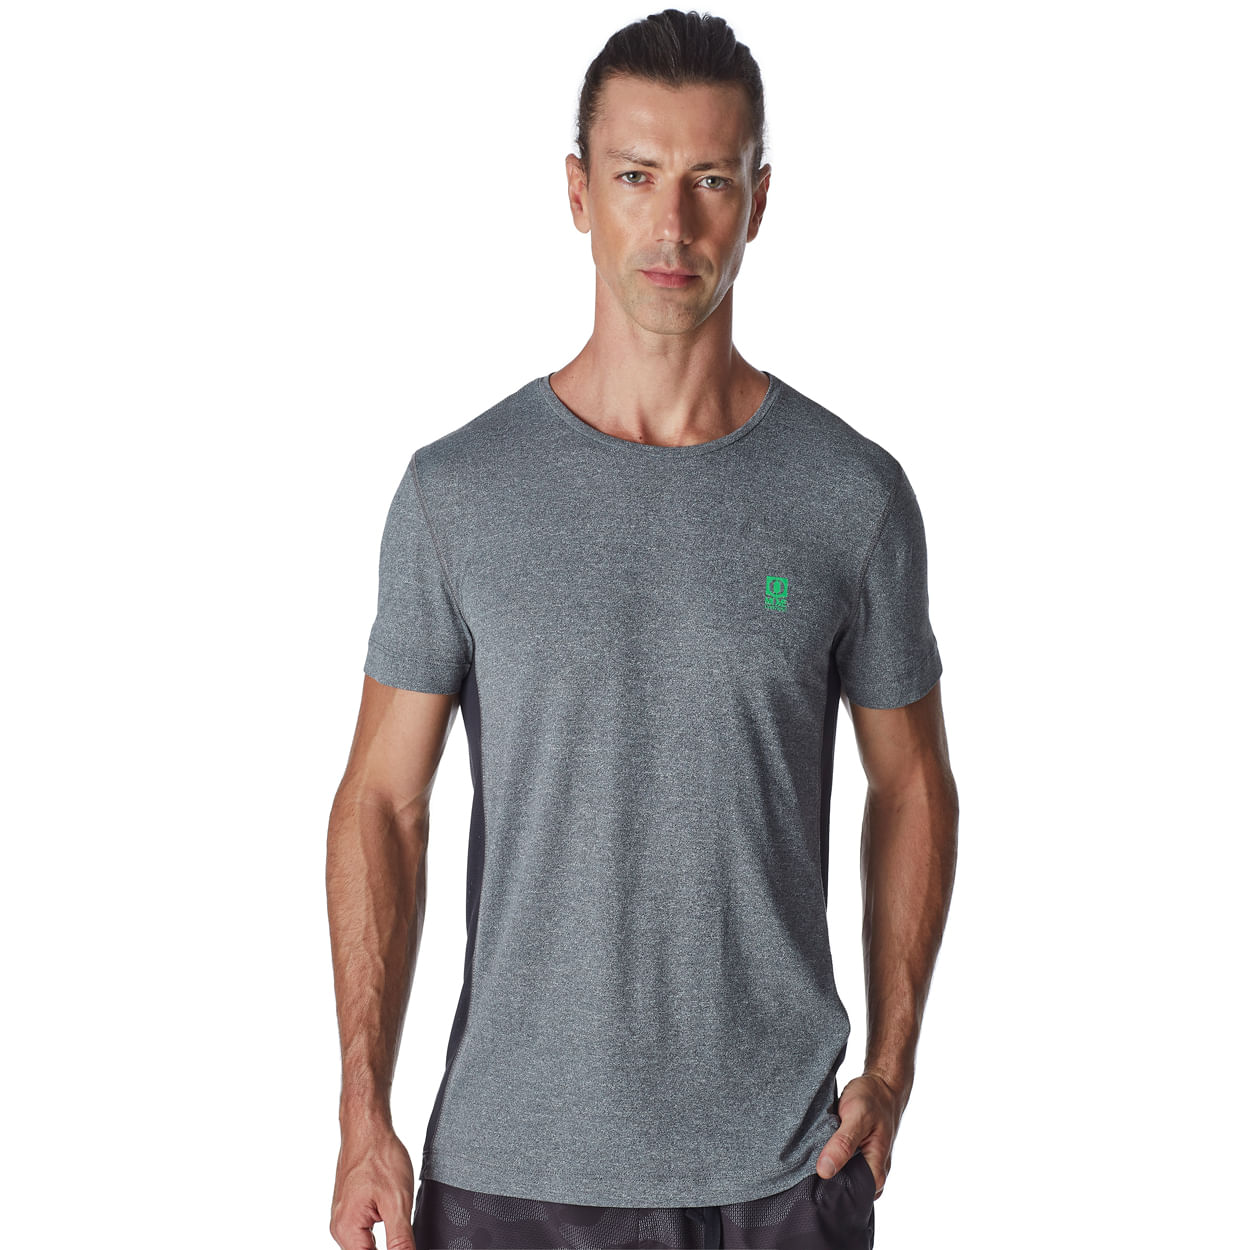 Camiseta Fitness Masculina Convicto com Tecnologia Truelife® Dry